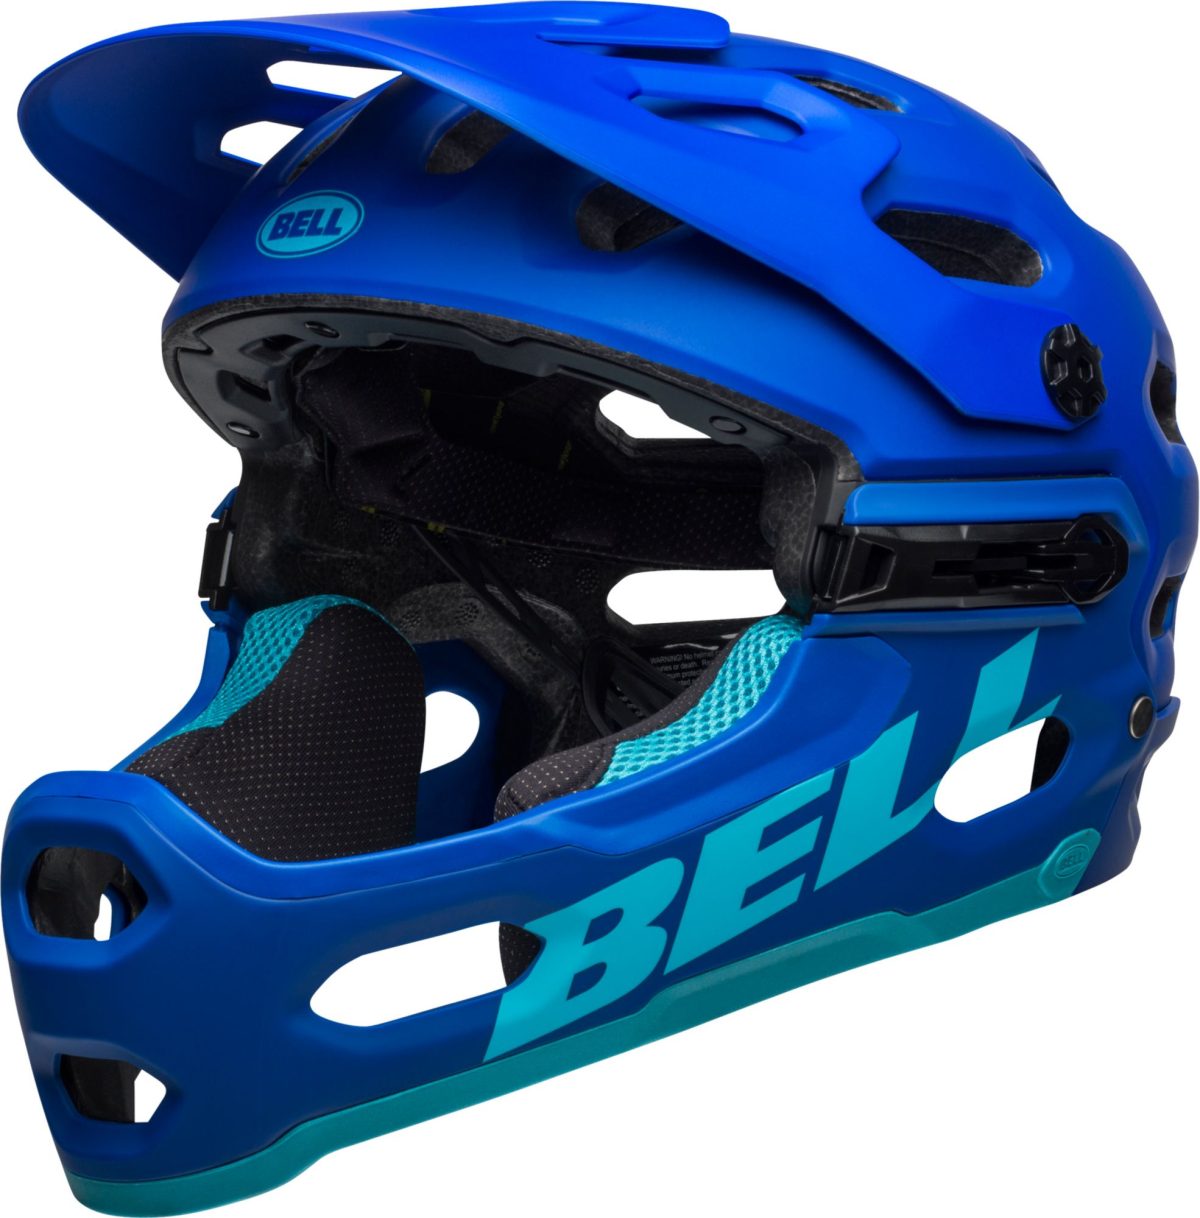 Bell Adult Super 3R MIPS Bike Helmet, Medium, Matte Blue